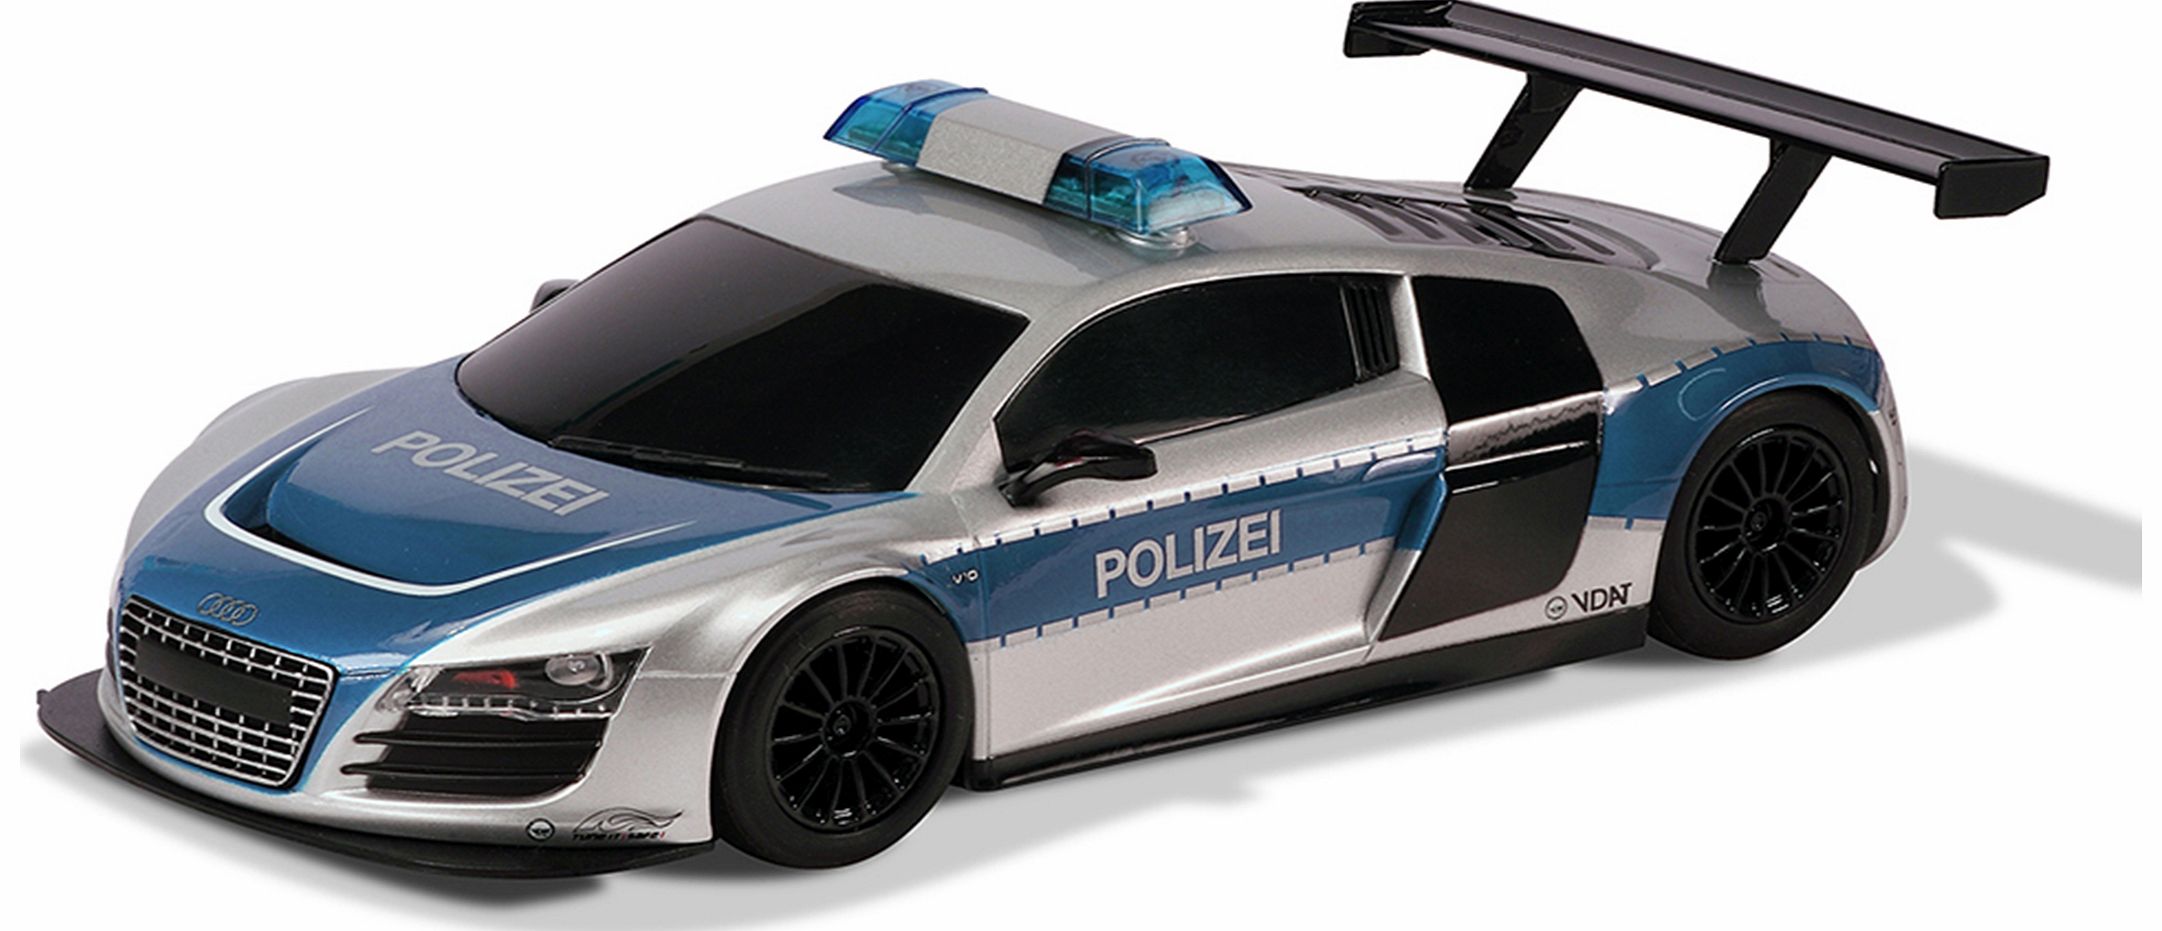 Scalextric Audi R8 Police Car